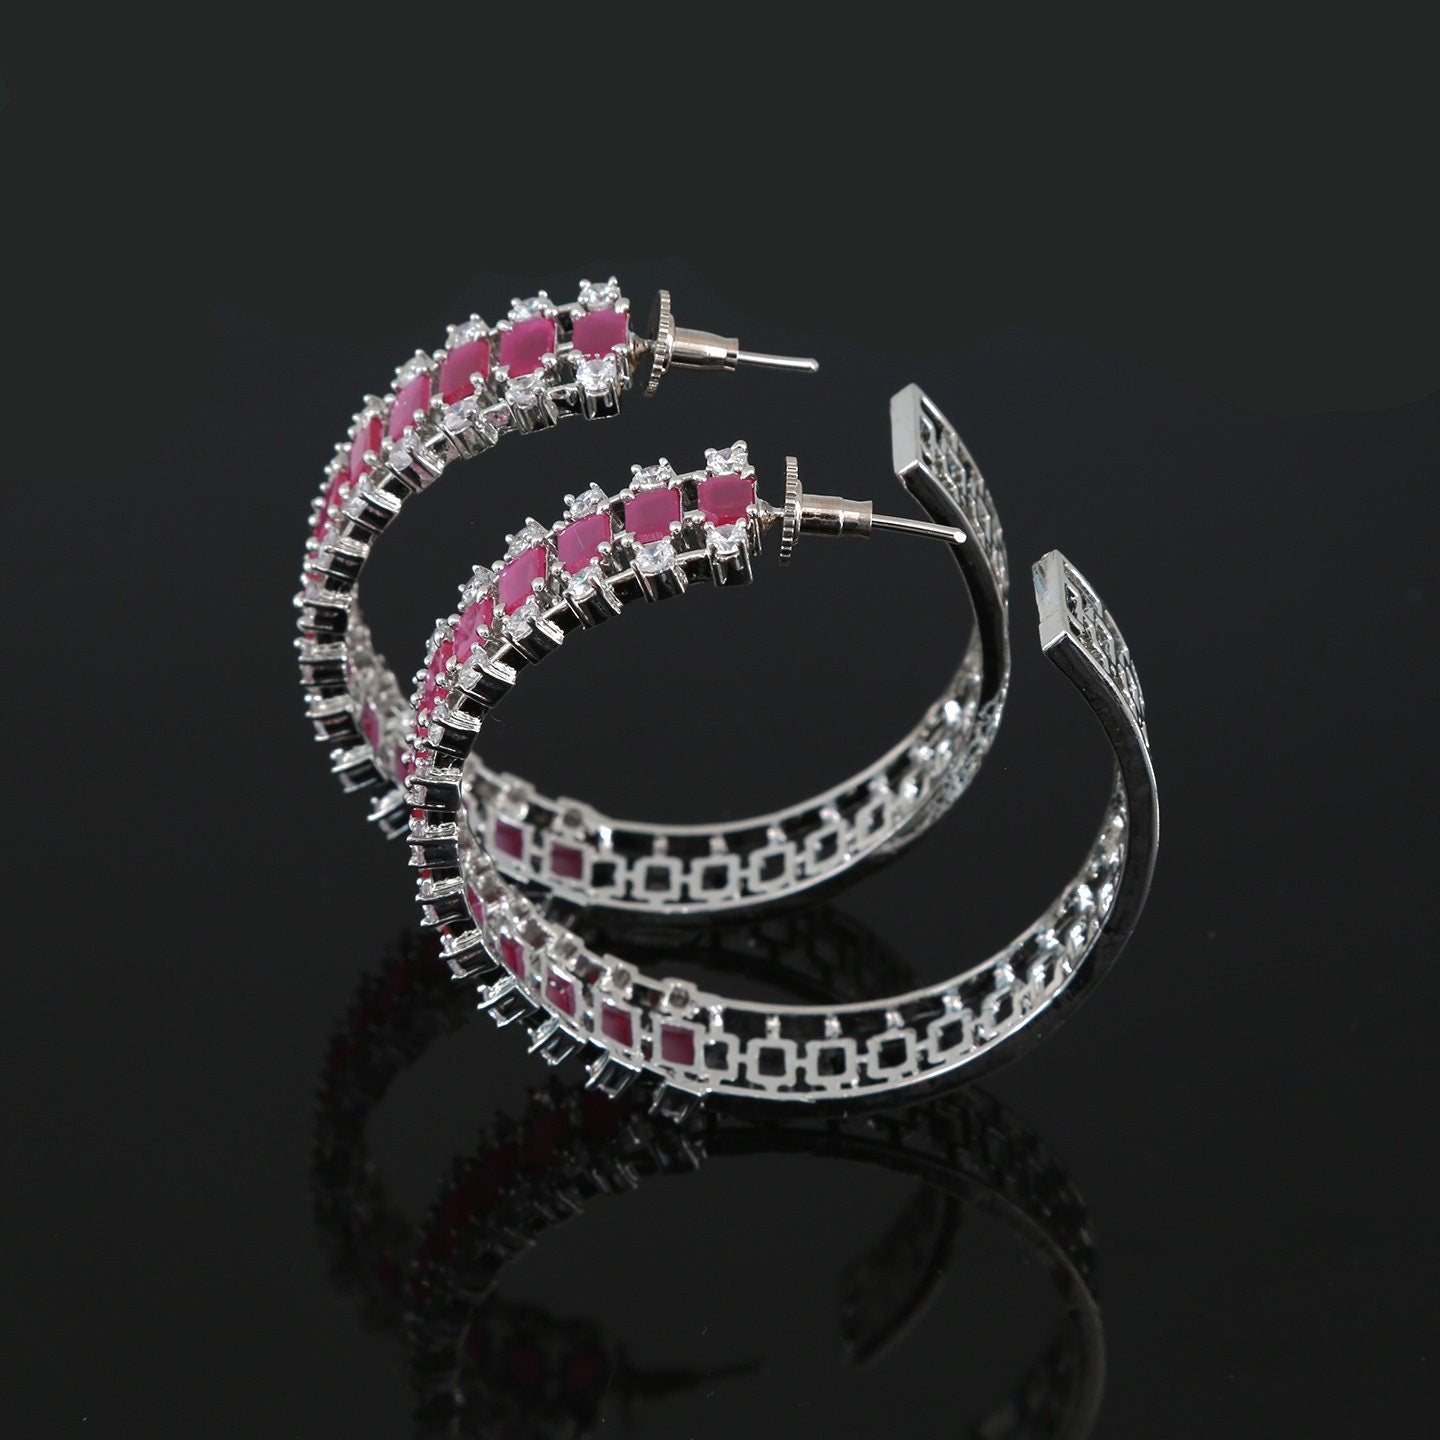 Rhodium plated Large Circle AD Chandbali earrings | Indian Jewelry Earrings | chand bali earrings for saree | CZ Diamond Statement Earrings